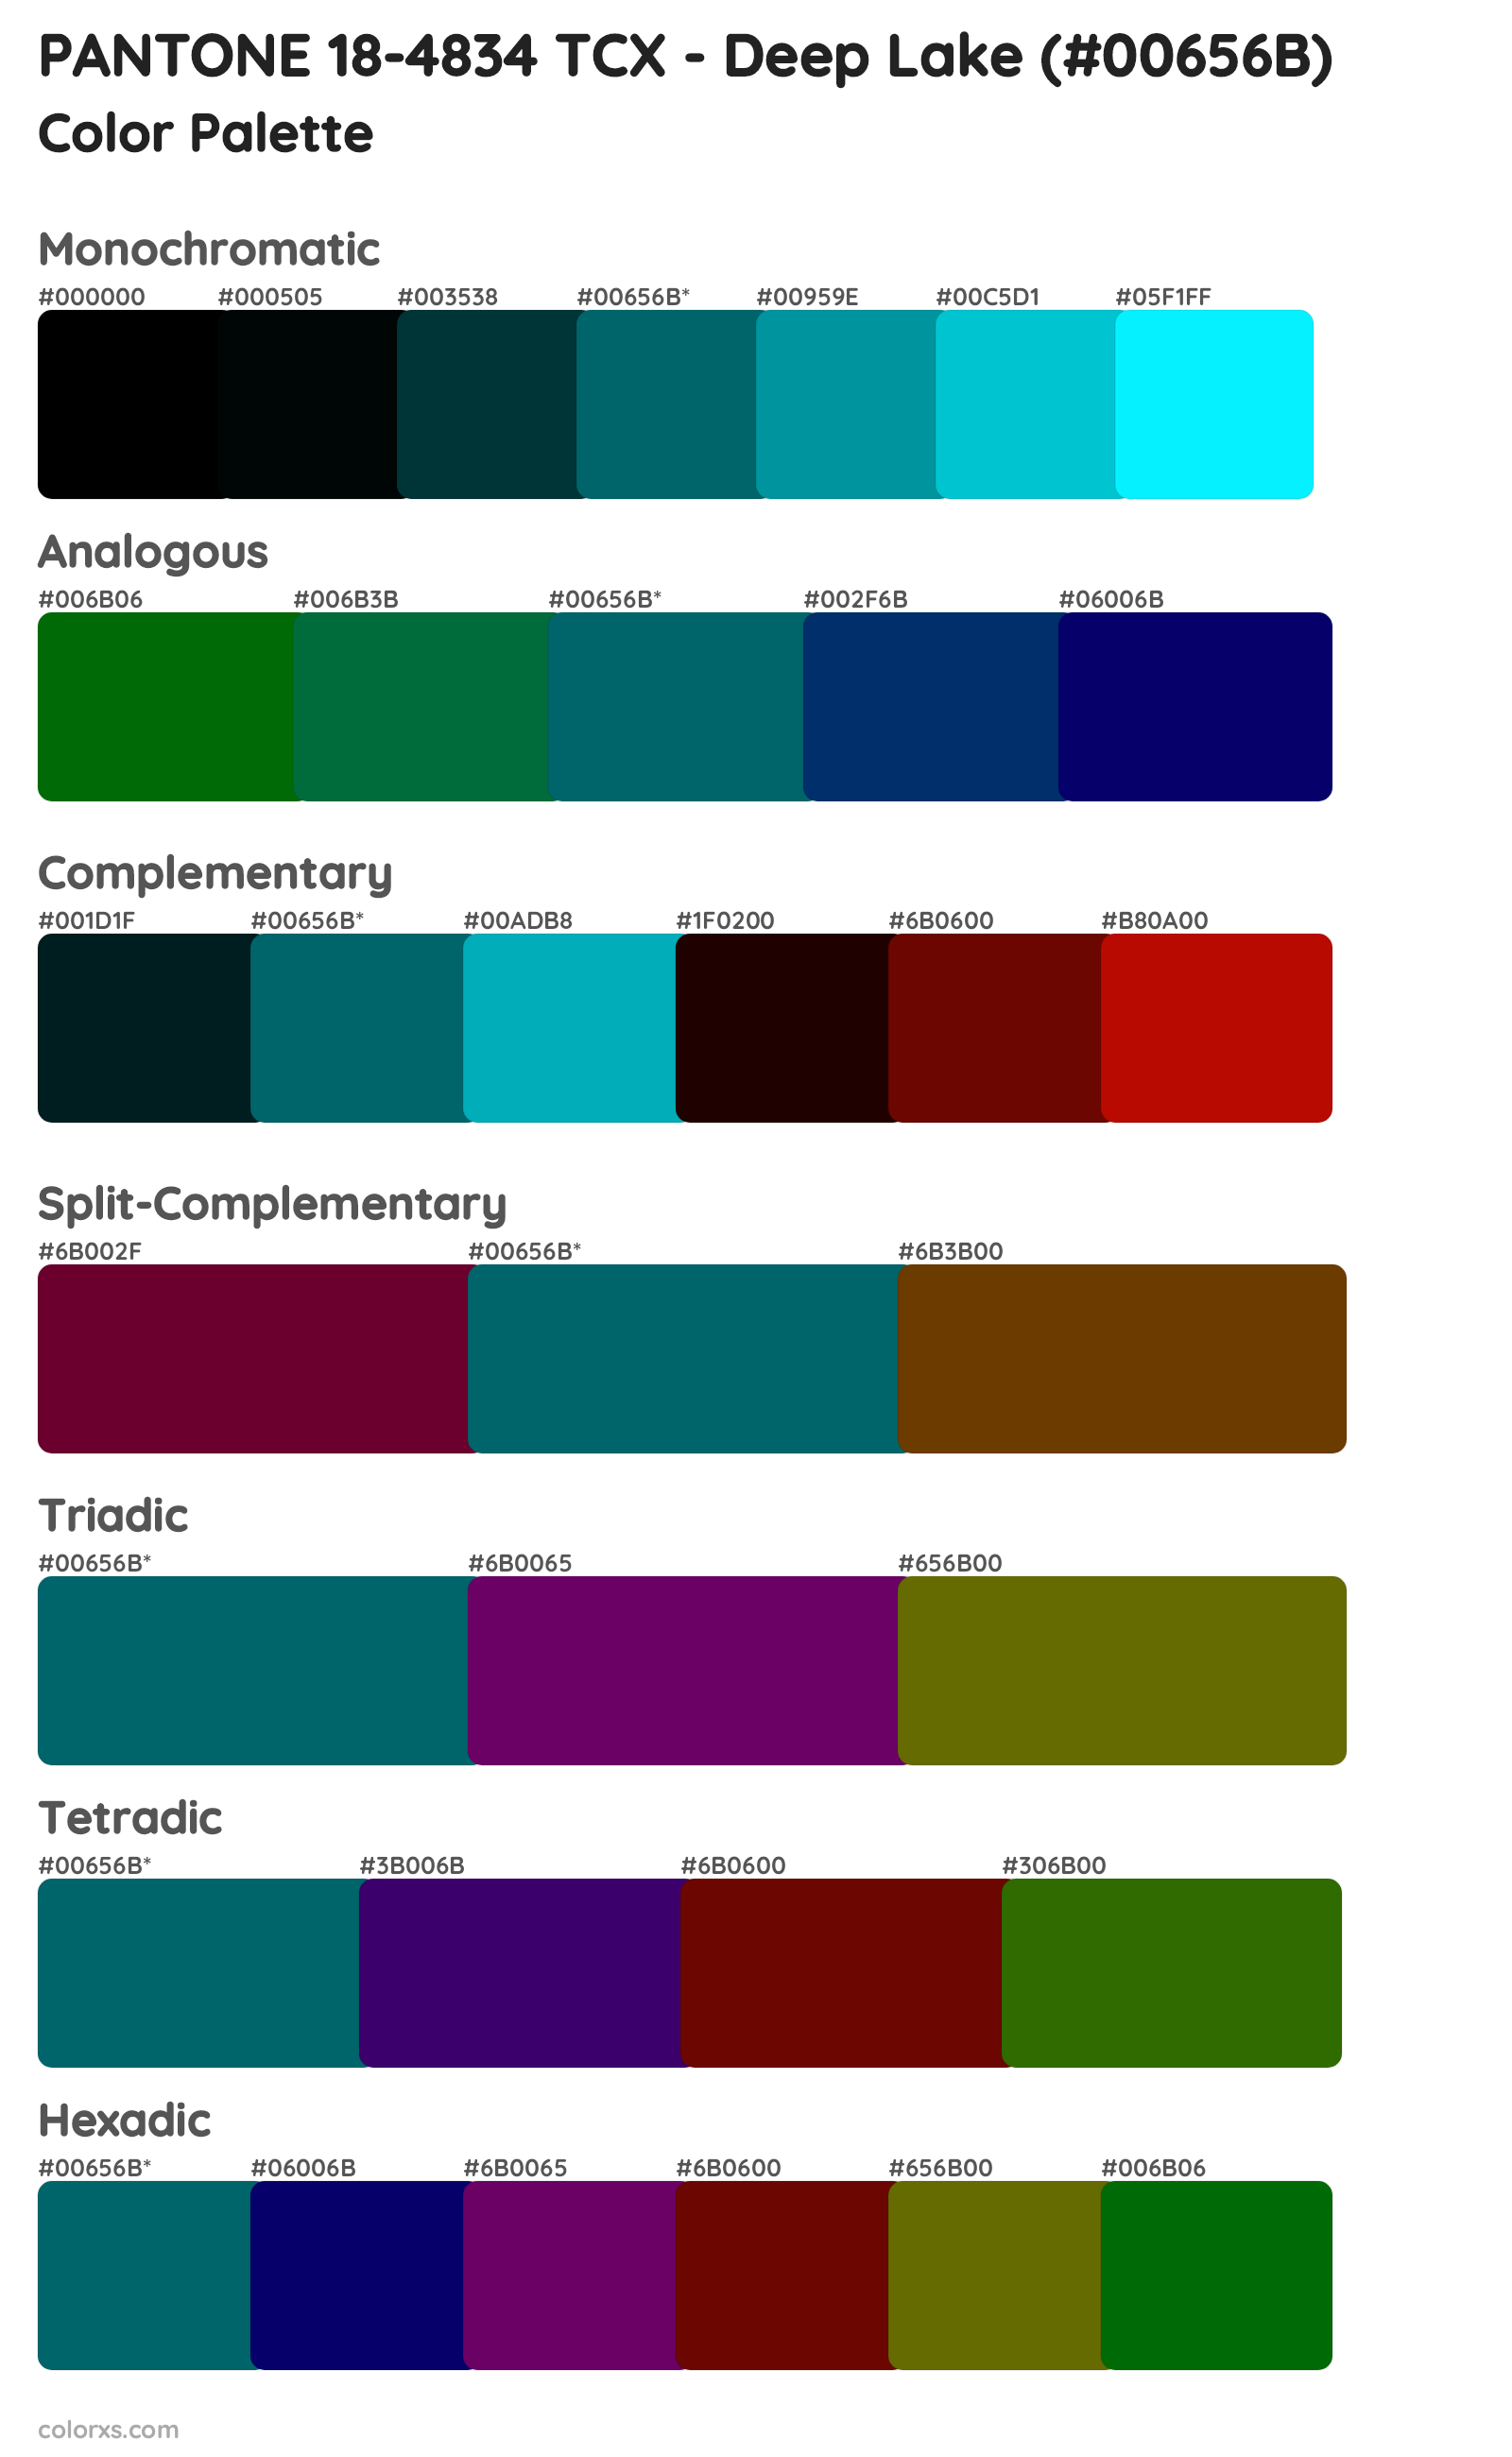 PANTONE 18-4834 TCX - Deep Lake Color Scheme Palettes